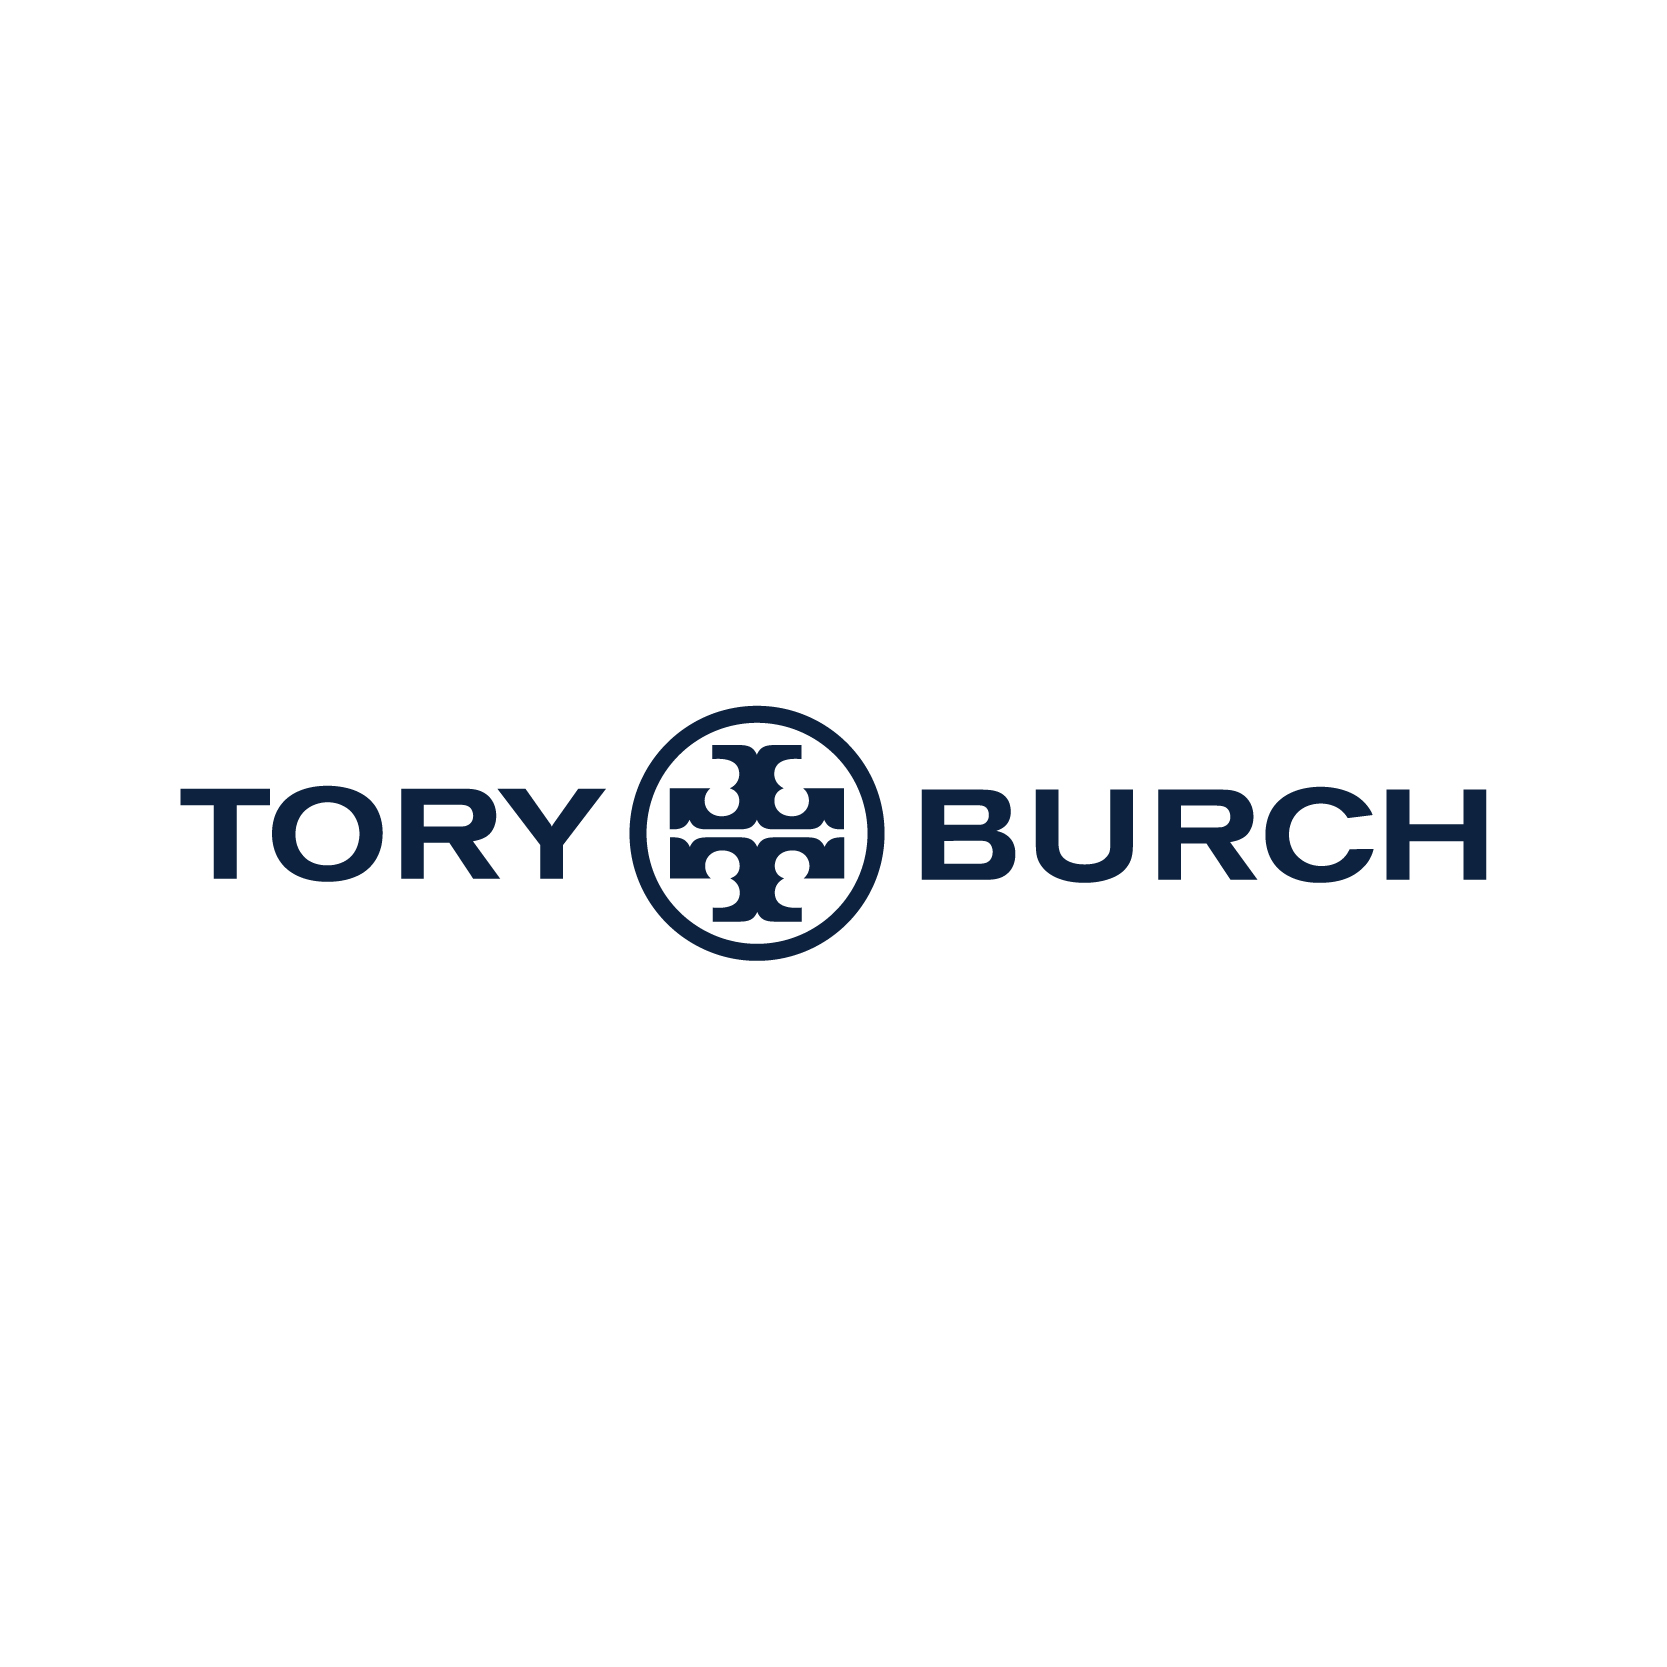 Tory Burch купоны 